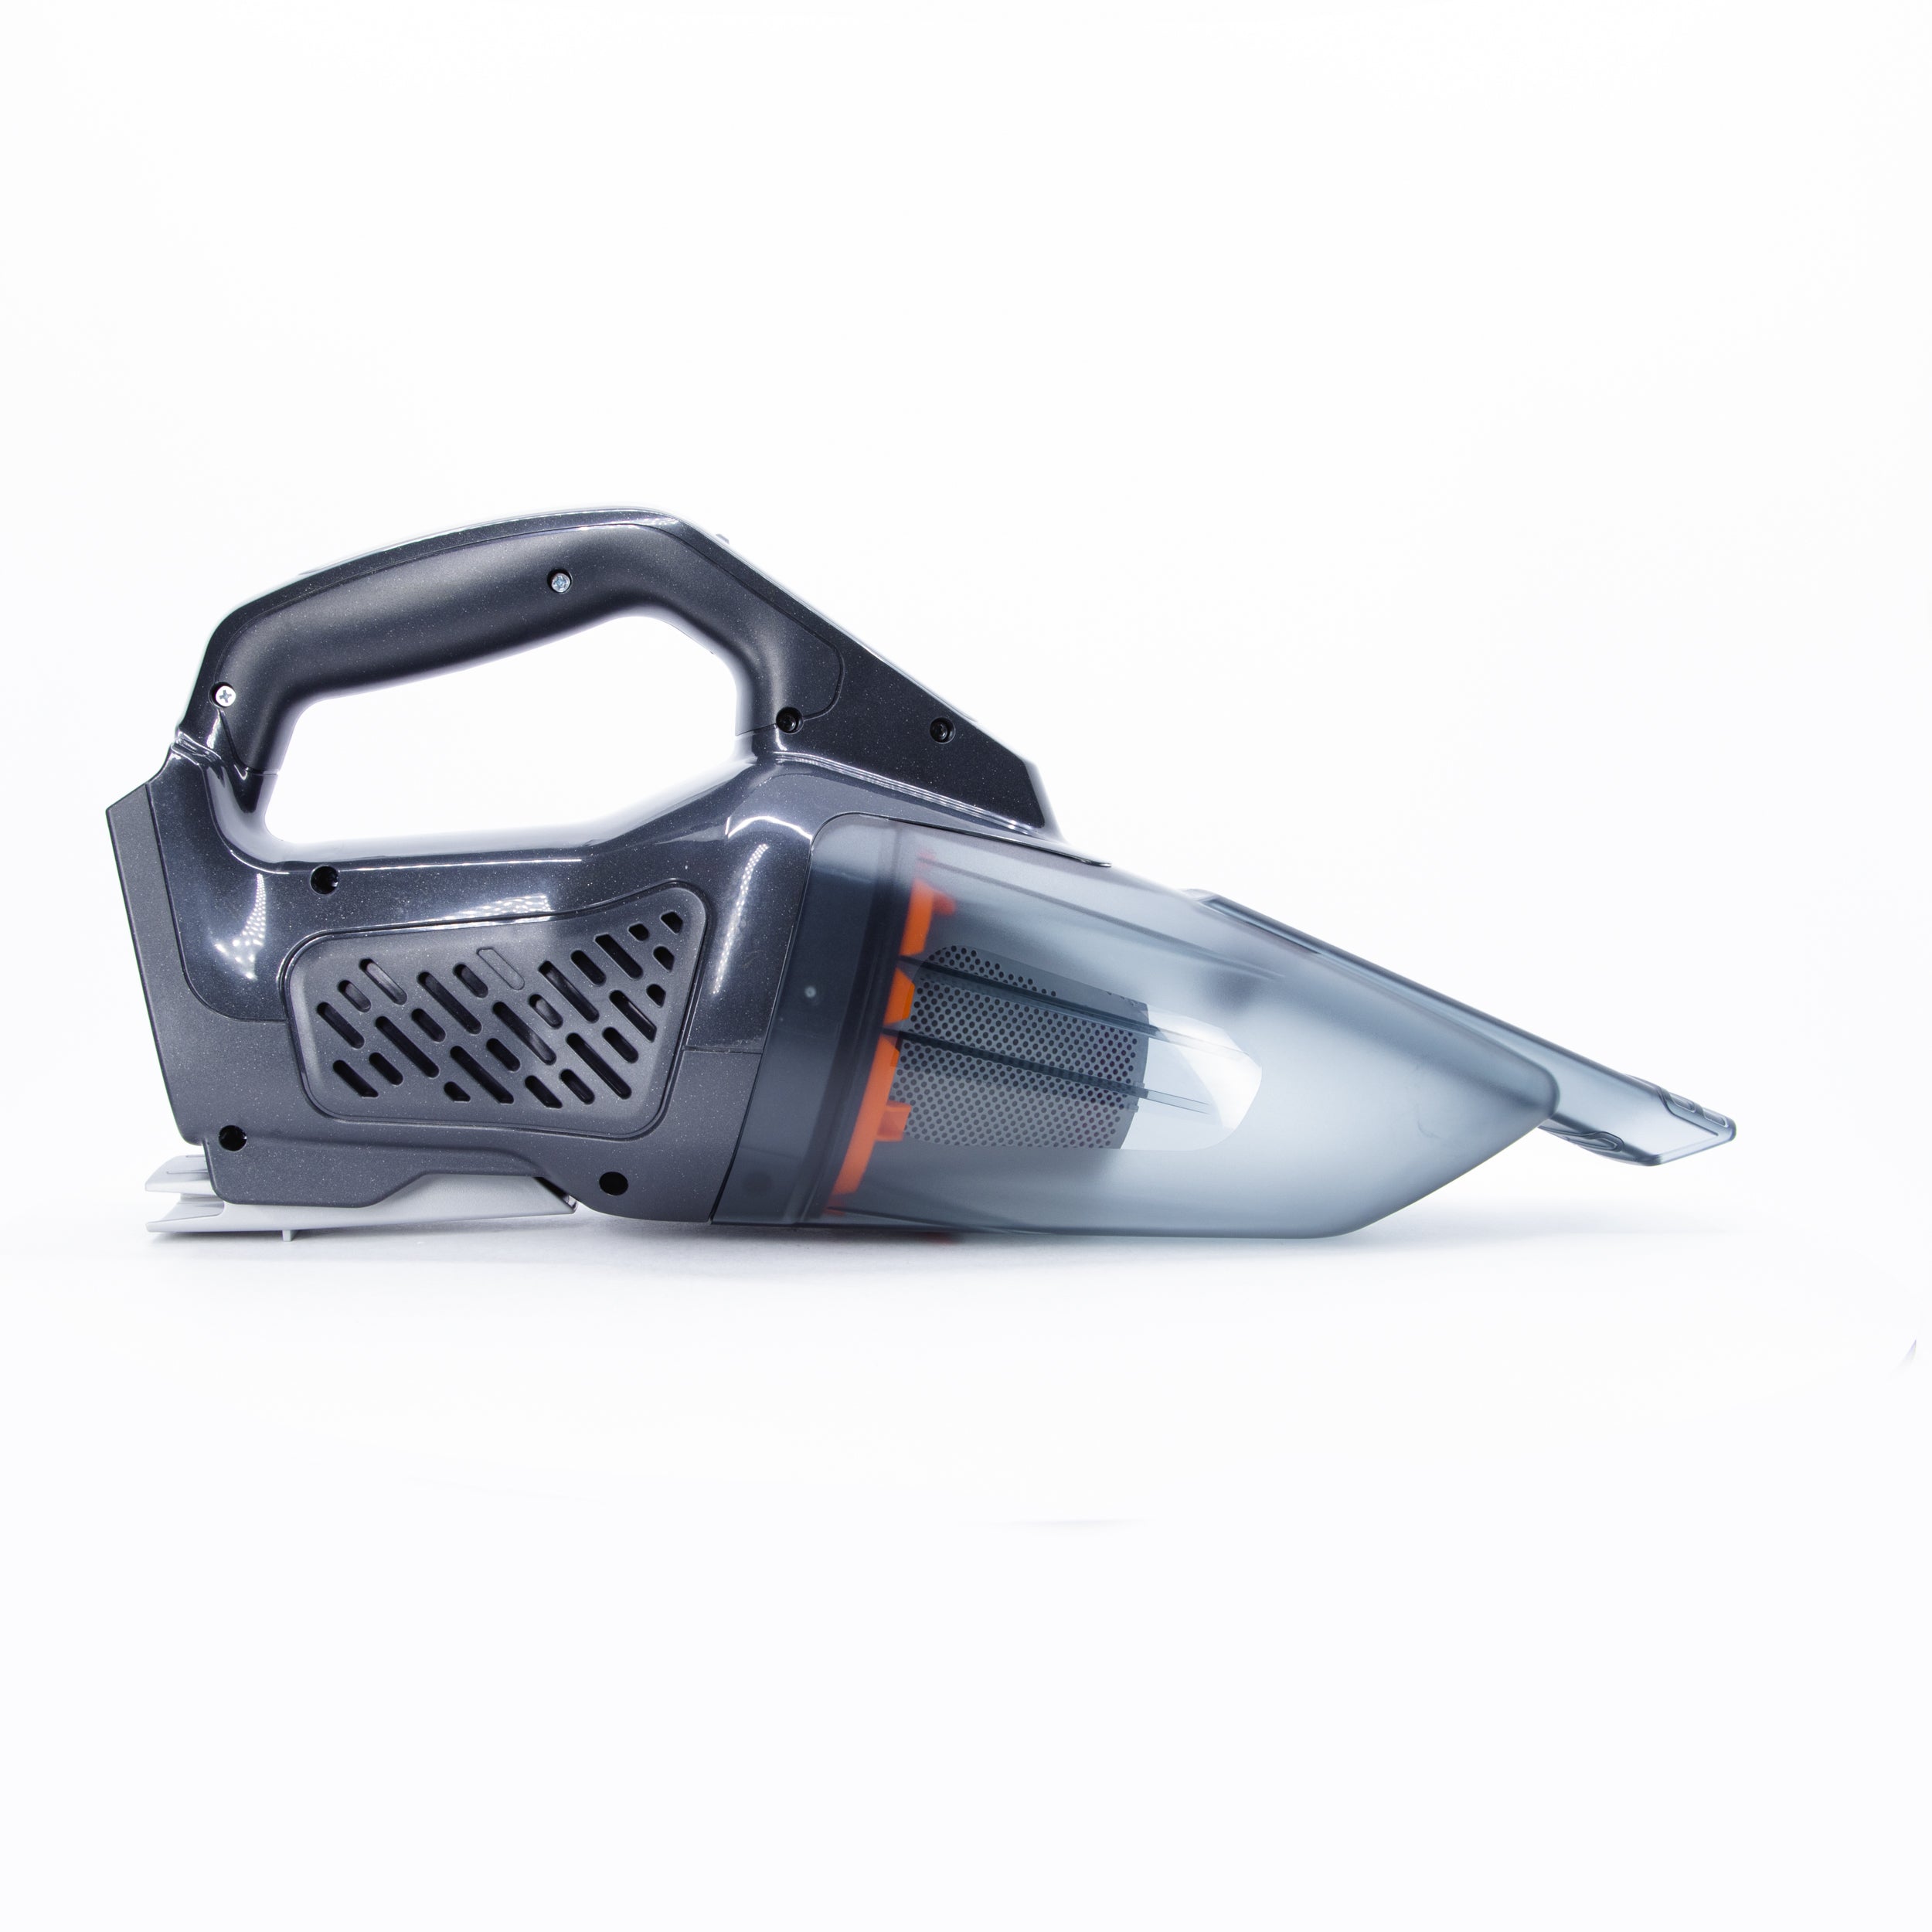 Black & Decker 20V Max Handheld Cordless Vacuum, Coral, Hardwood